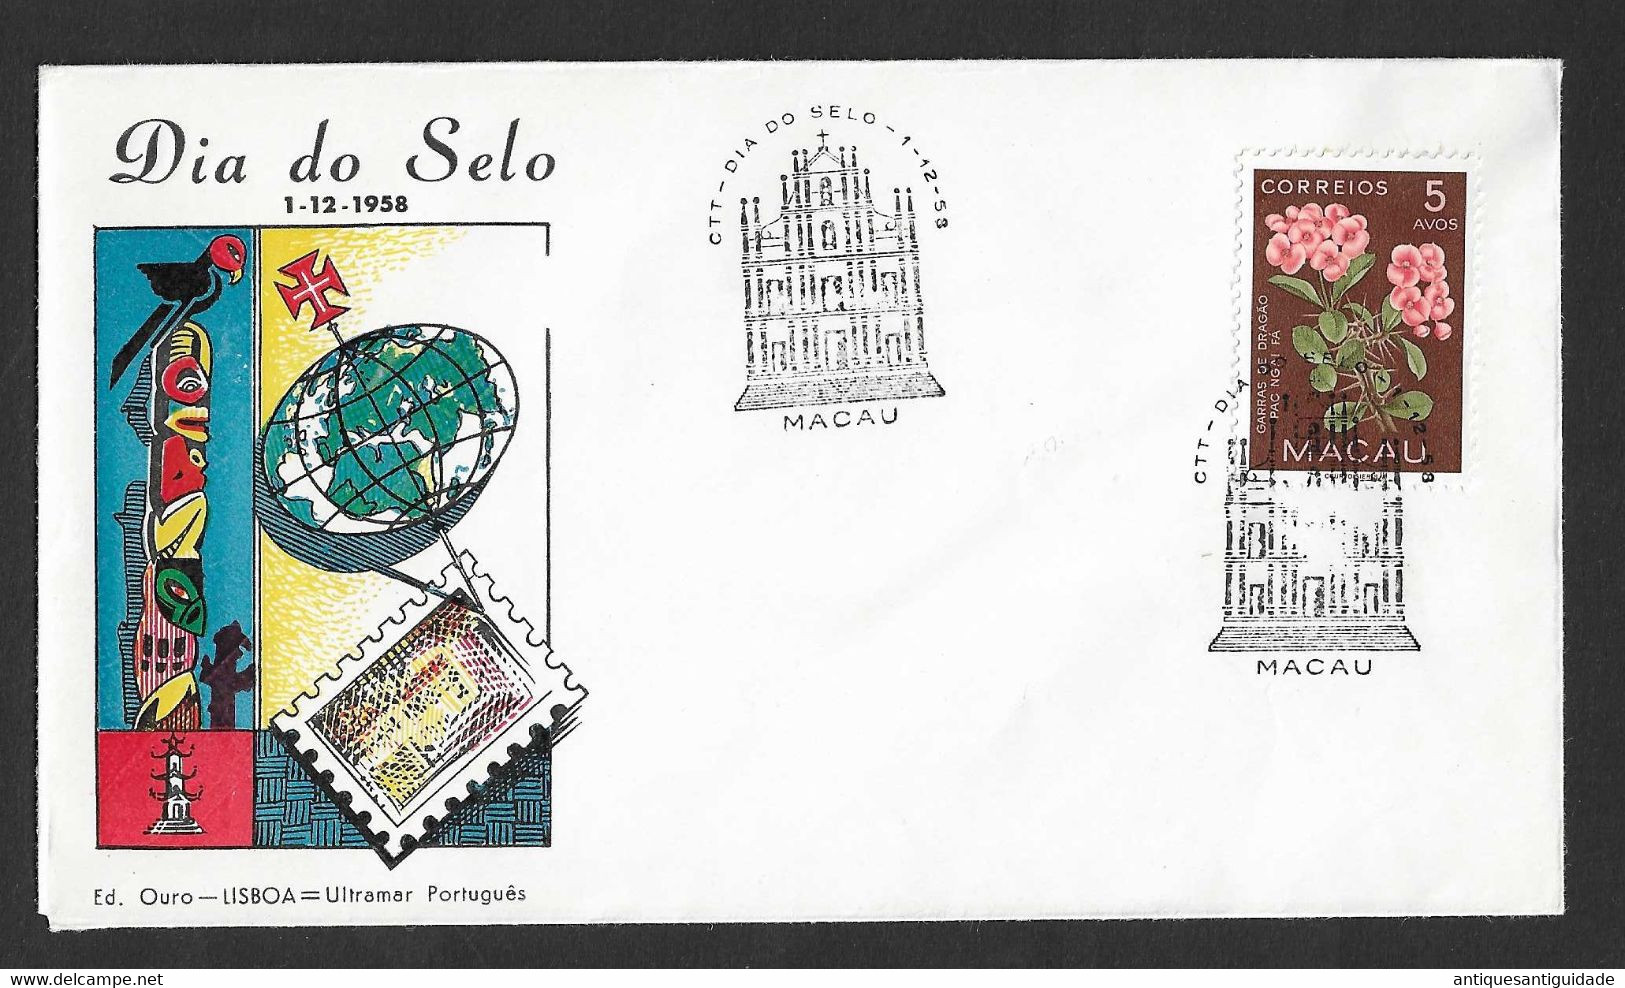 1958 FDC Macau - Stamp Day - Gold Edition - Lisbon = Portuguese UltraMar - FDC